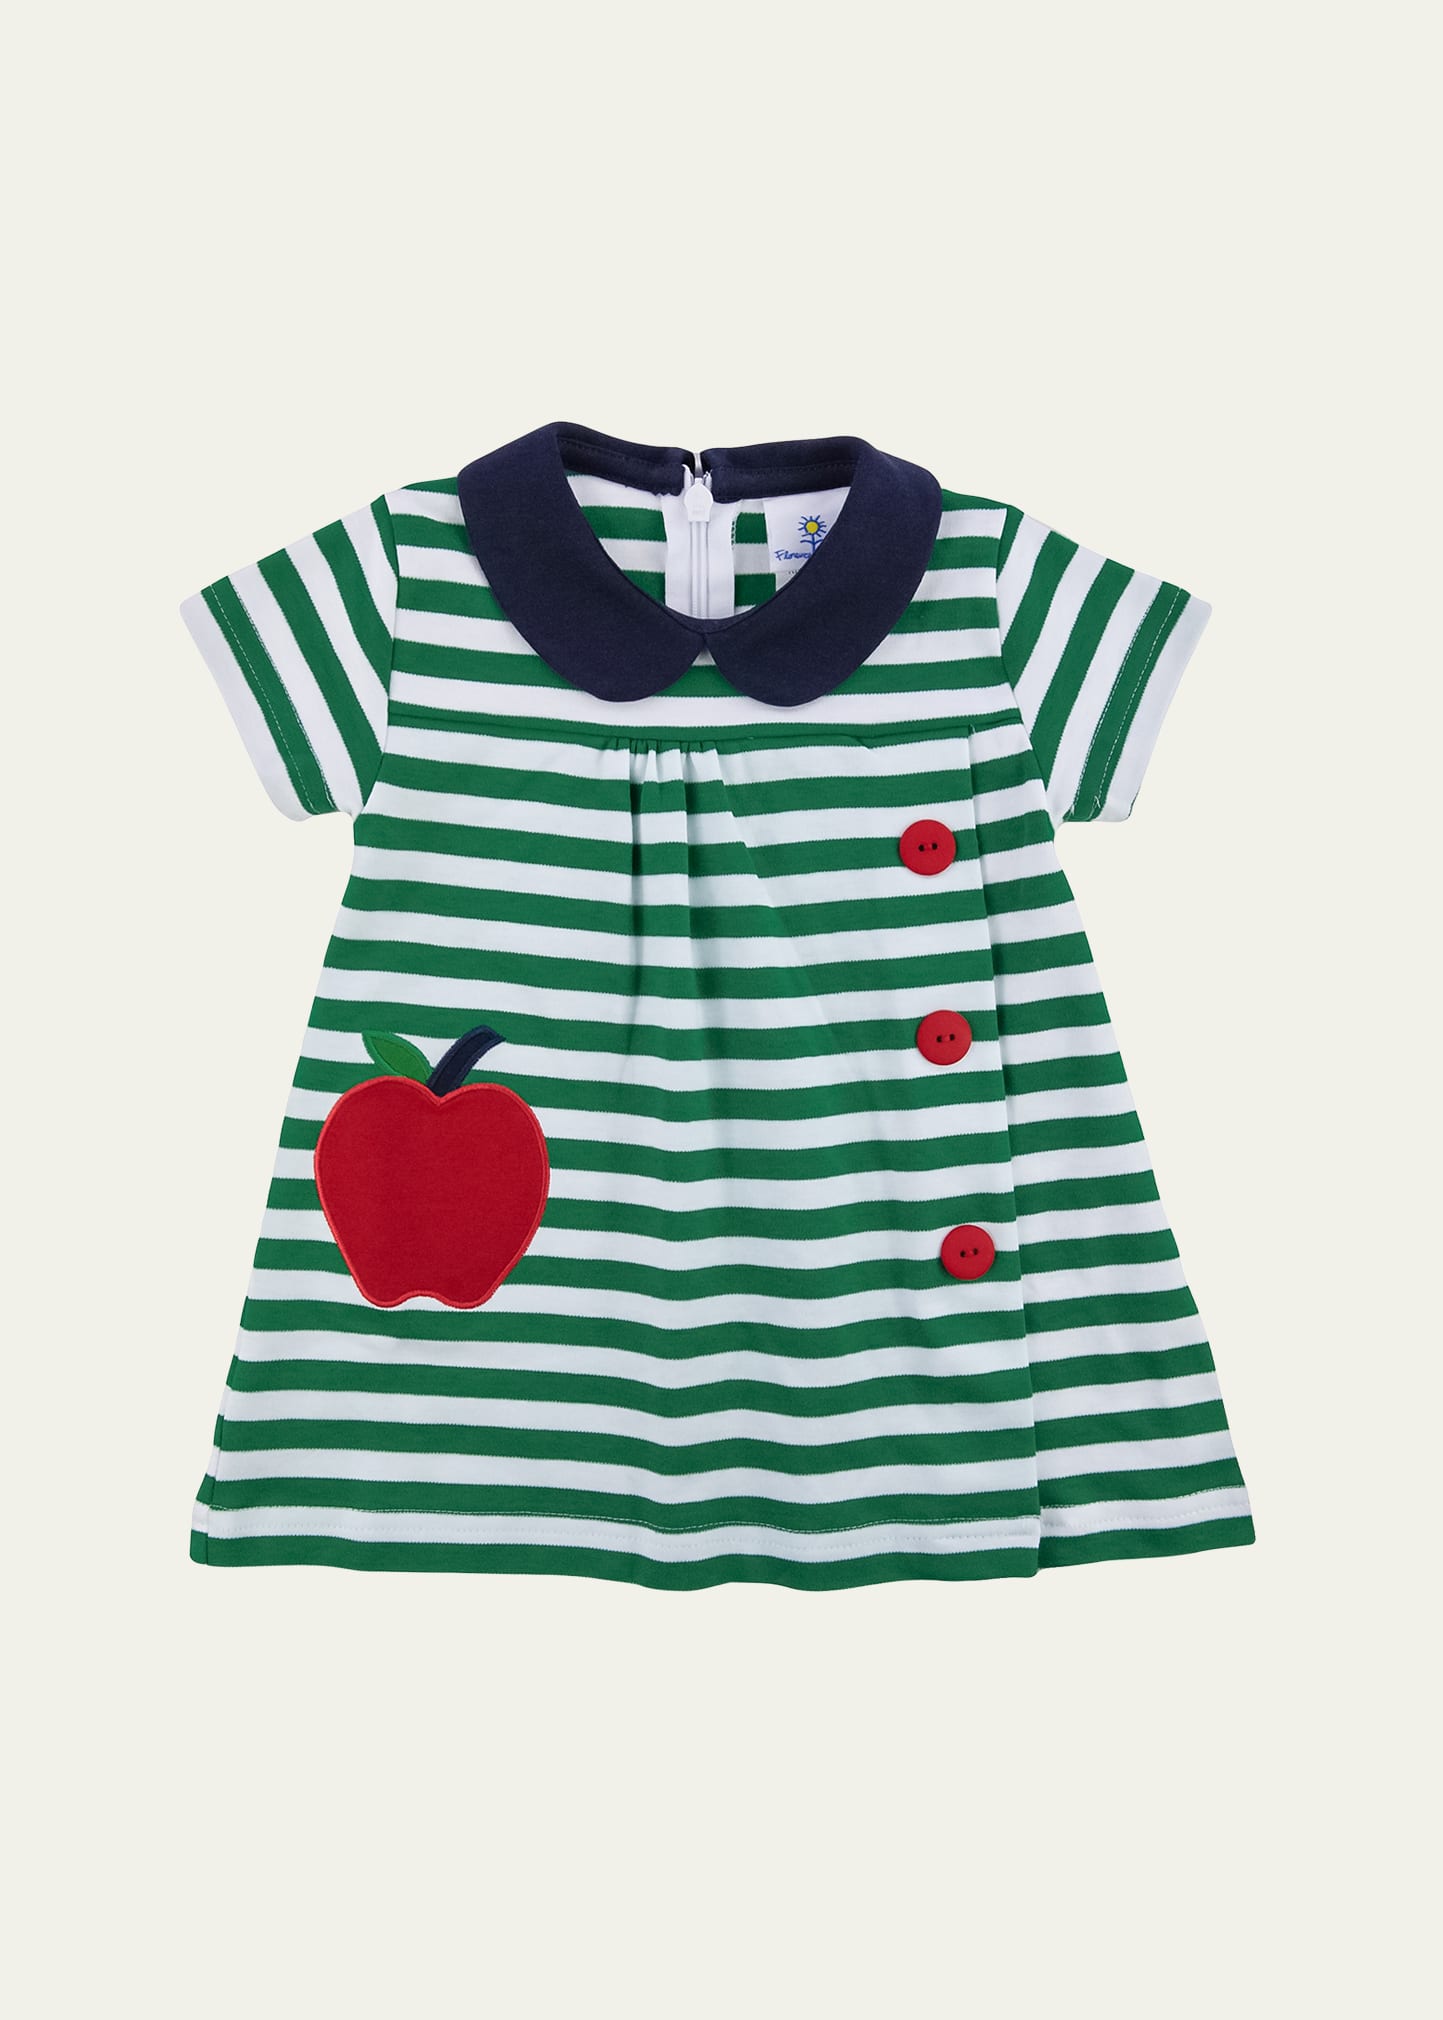 Girl's Striped Knit Dress W/ Apple Applique, Size 4T-3